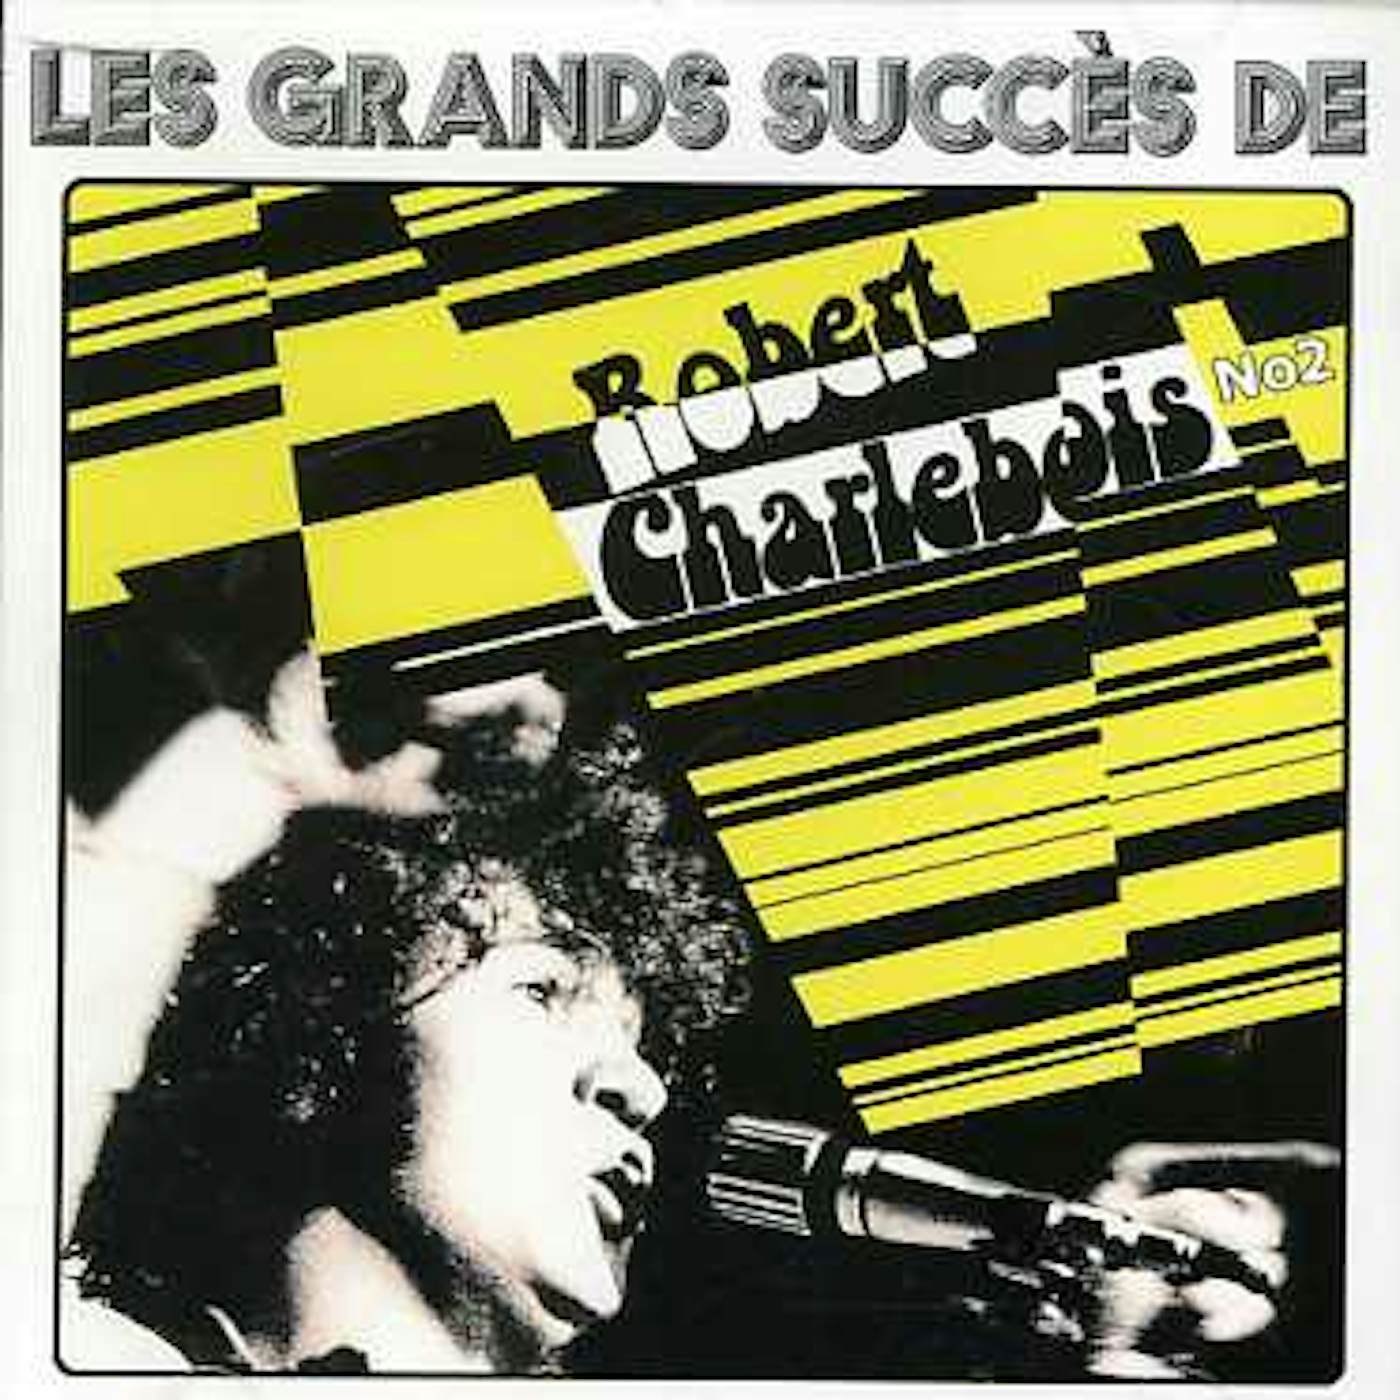 Robert Charlebois PLUS GRANDS SUCCES 2 CD